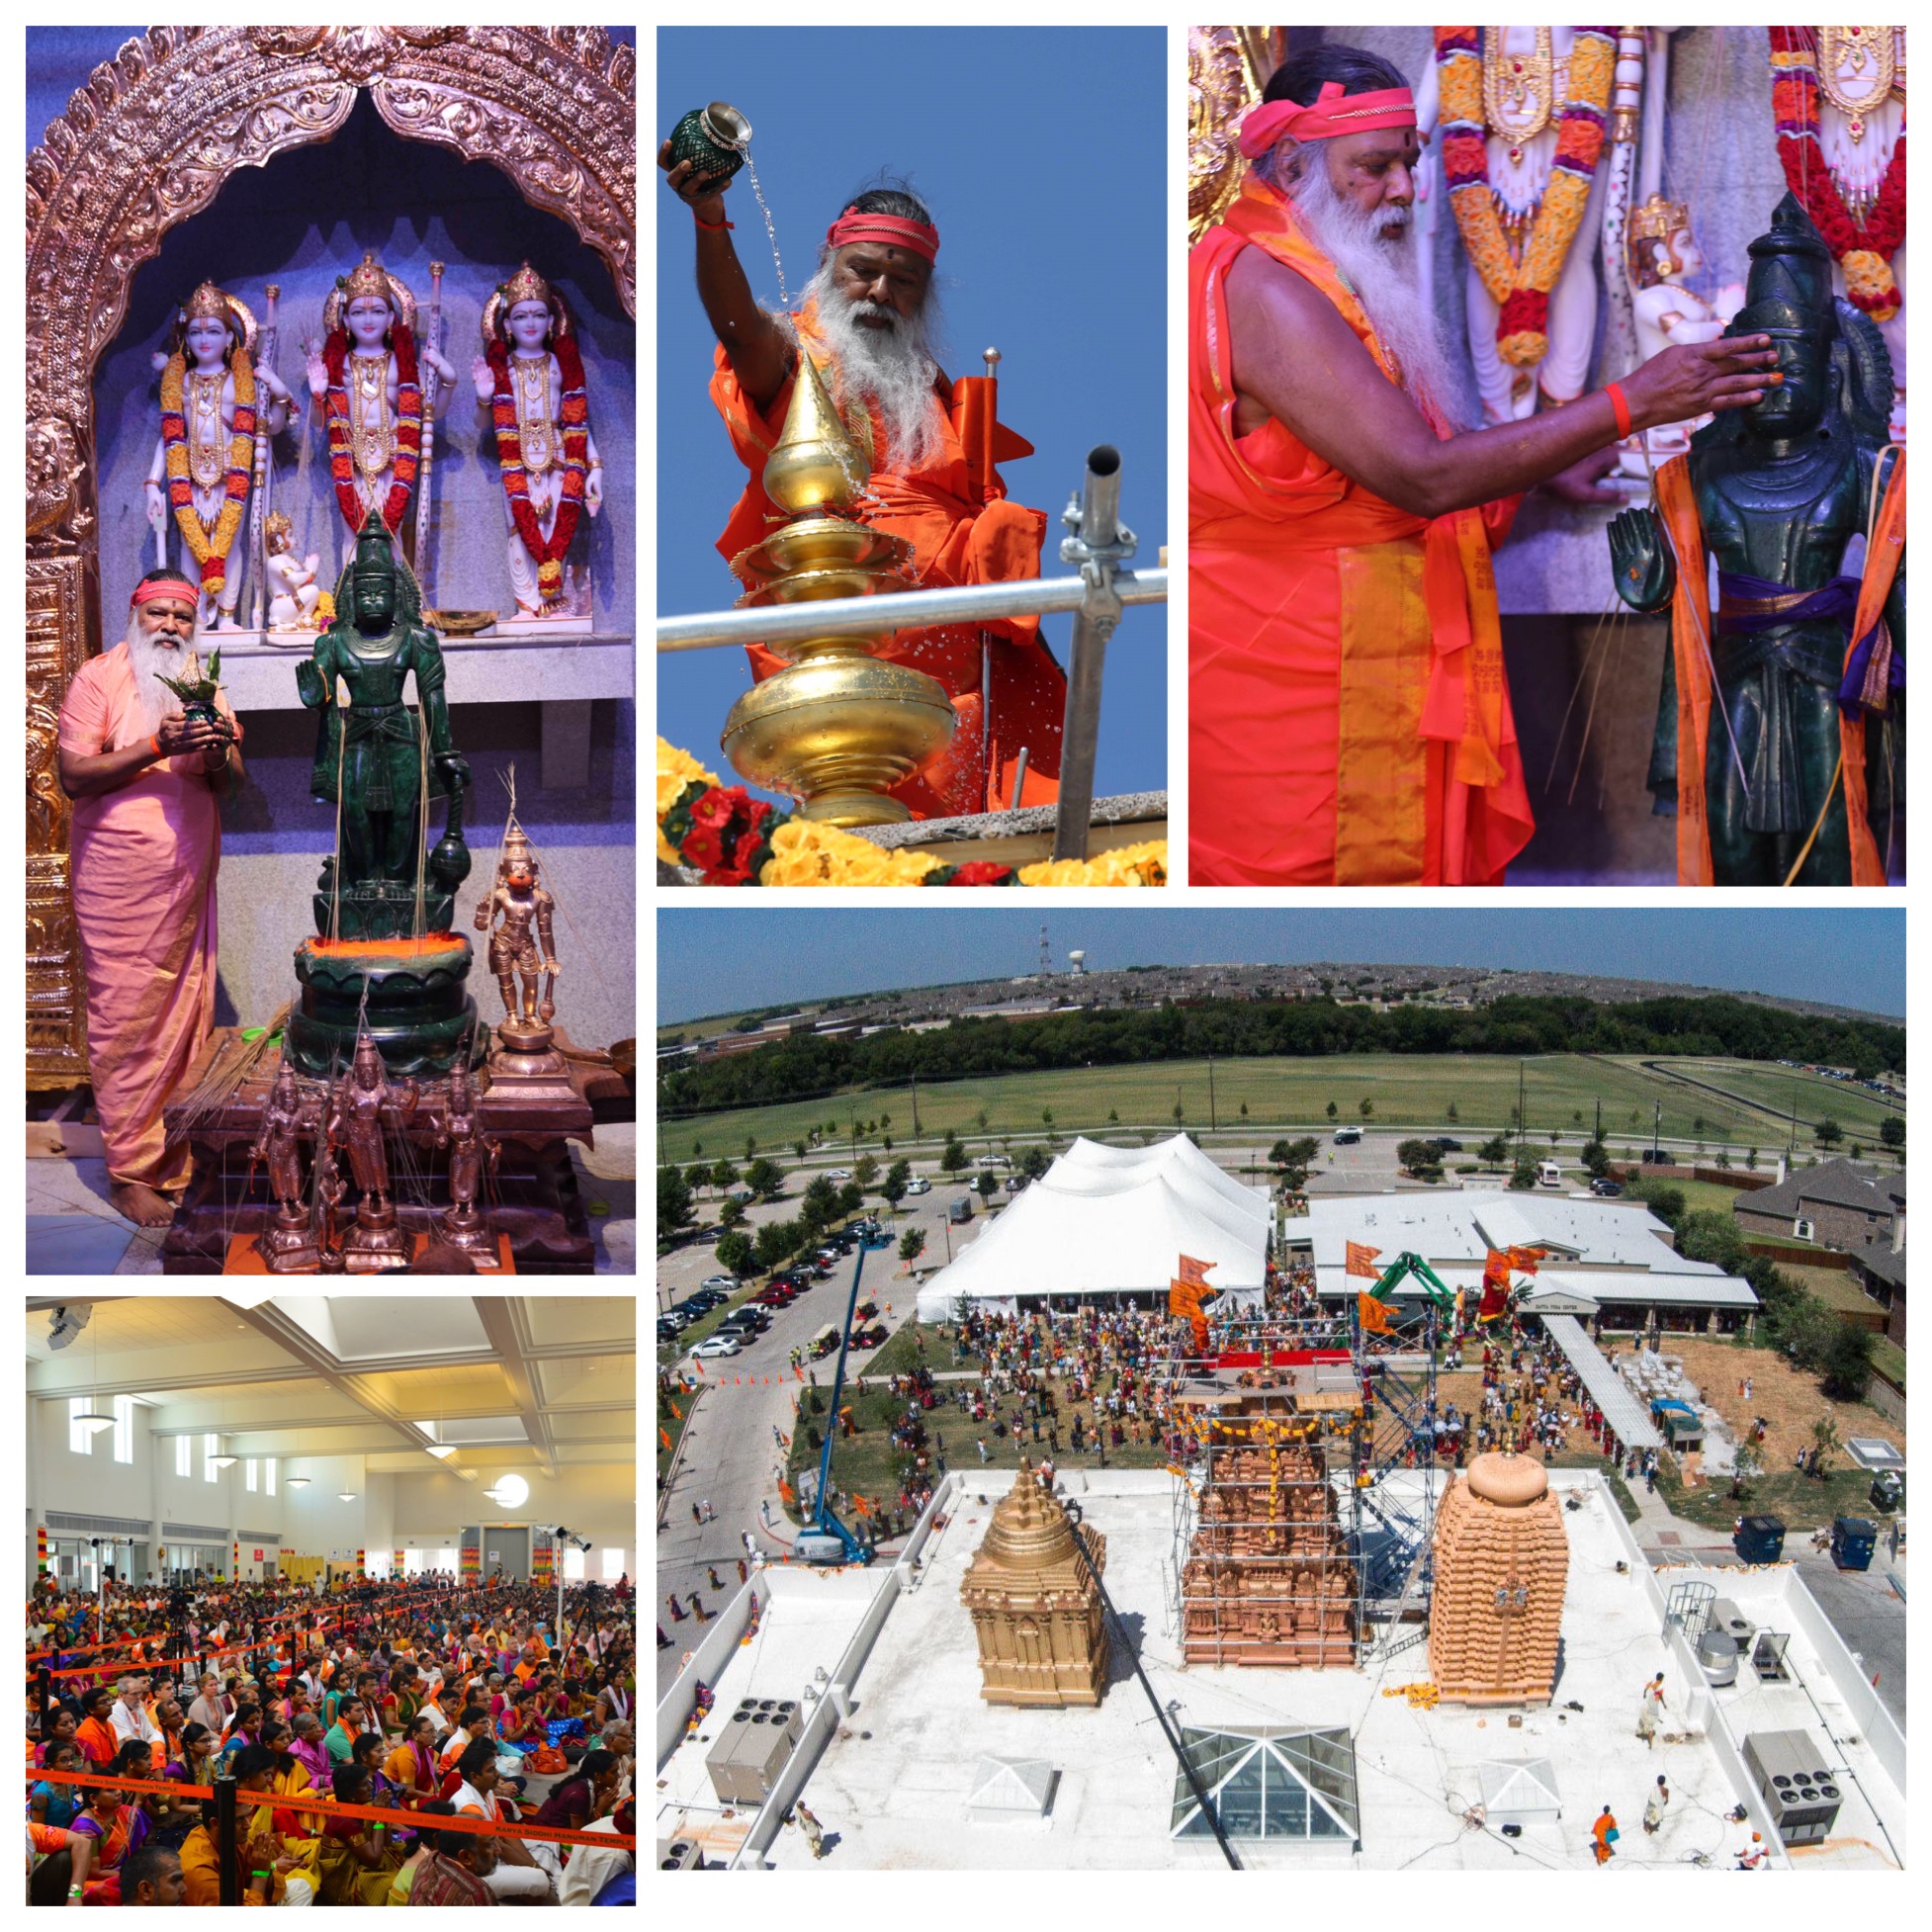 His Holiness Sri Ganapathy Sachchidananda Swamiji Inaugurates One of